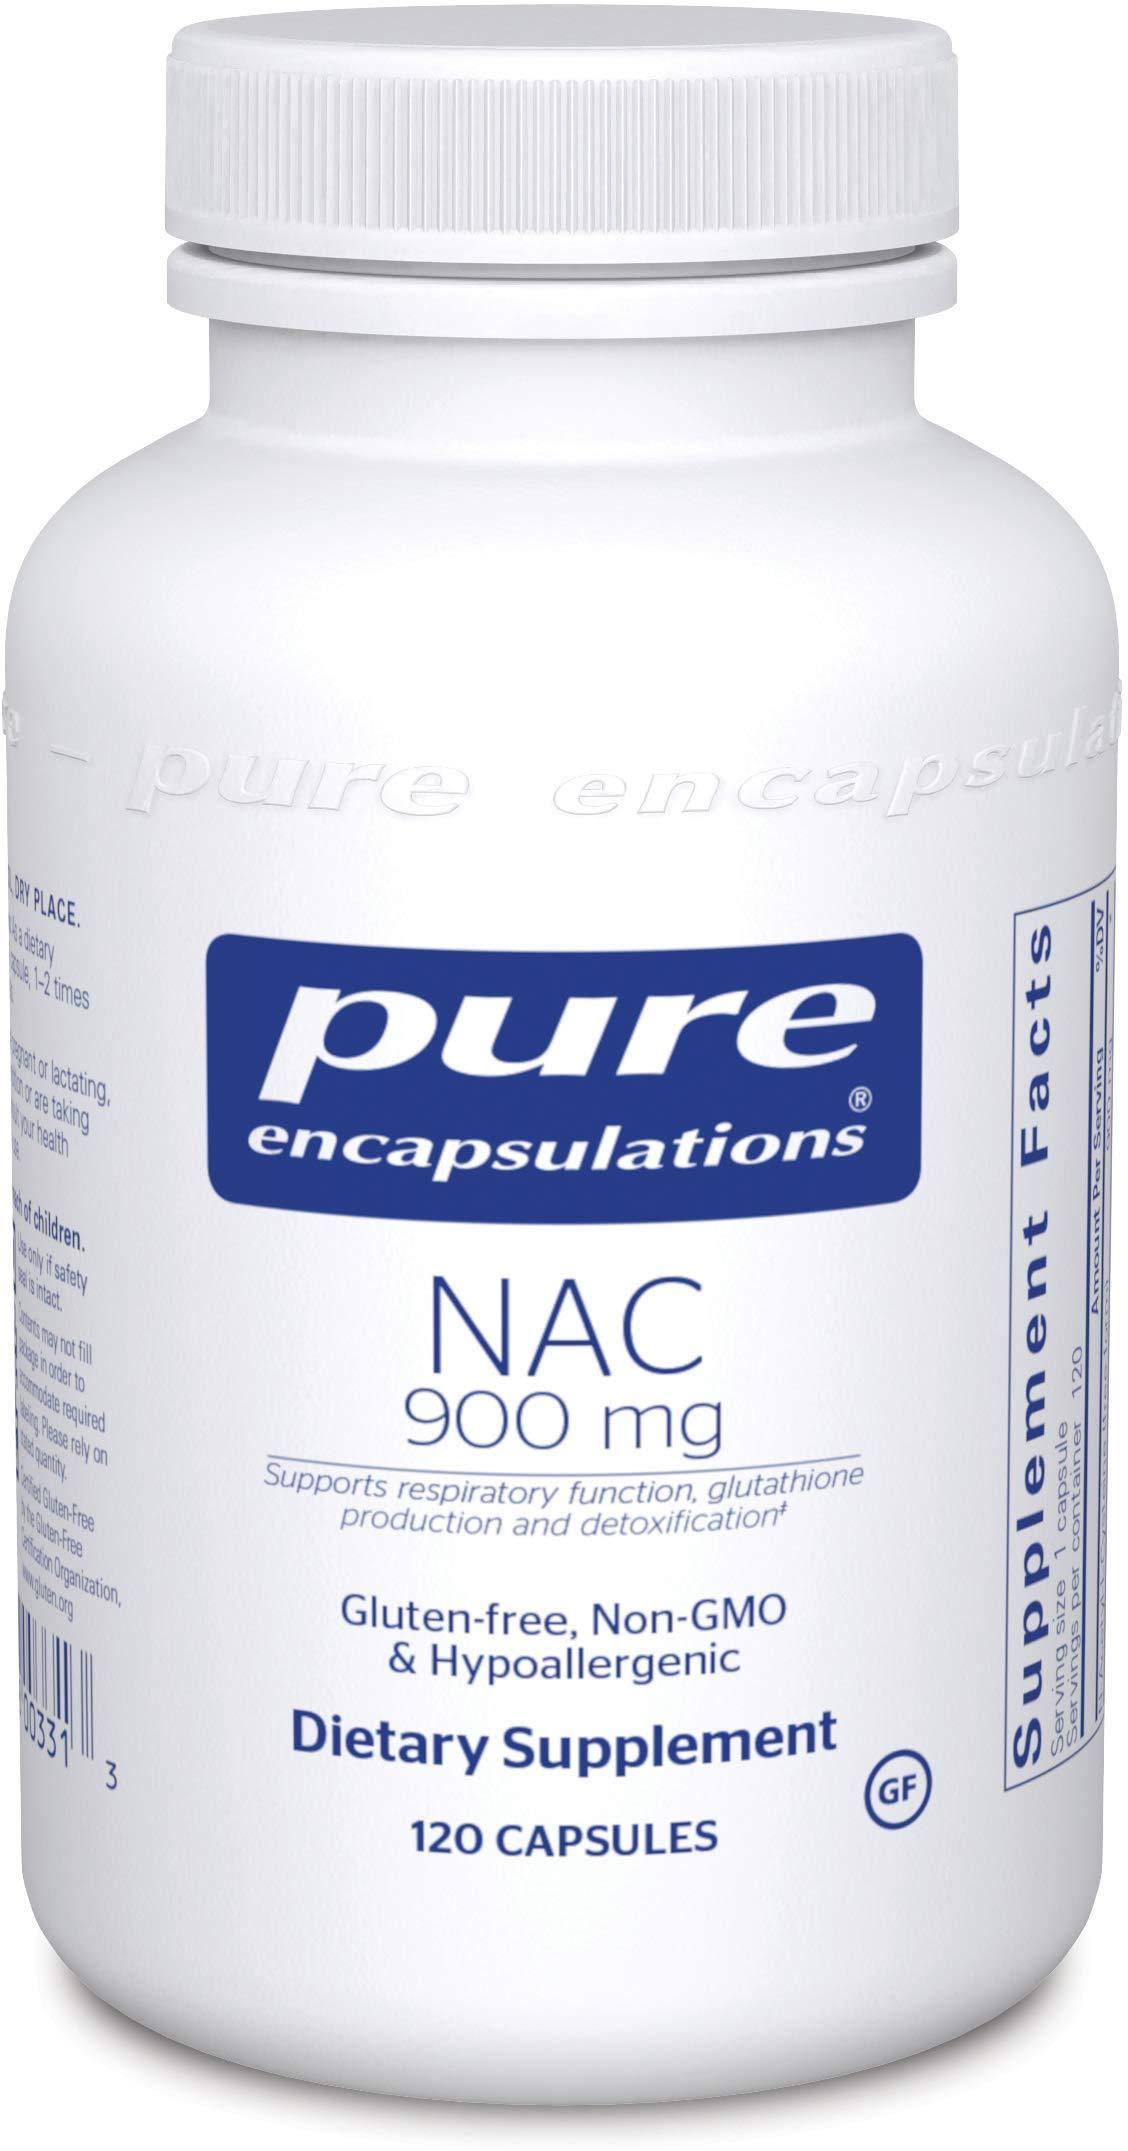 Pure Encapsulations Nac - 120's, 900mg